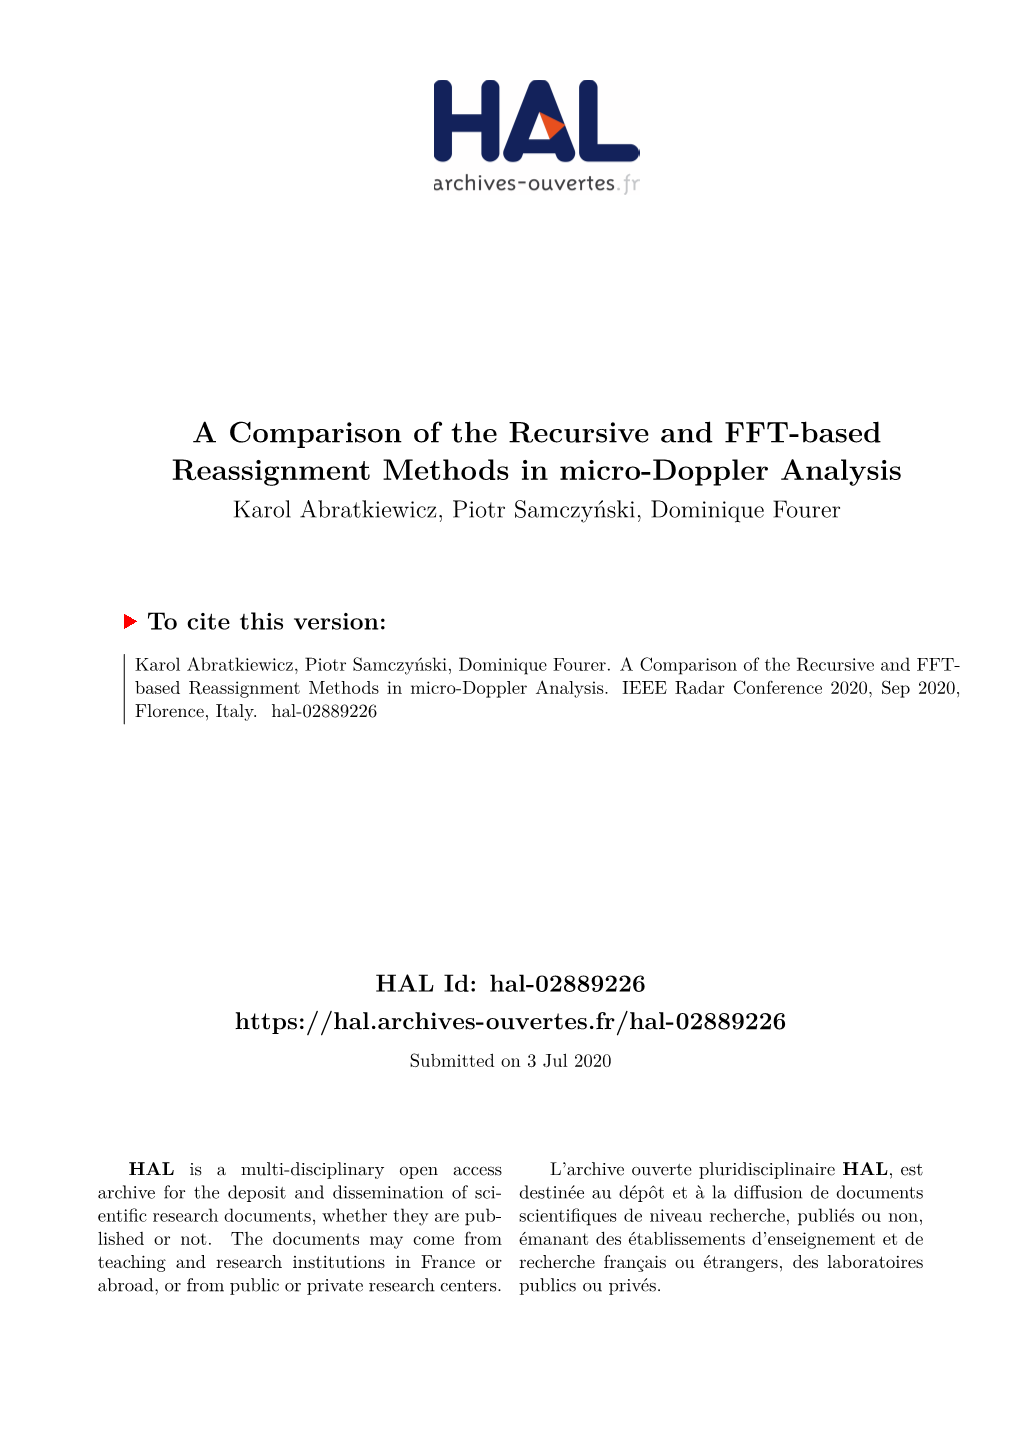 A Comparison of the Recursive and FFT-Based Reassignment Methods in Micro-Doppler Analysis Karol Abratkiewicz, Piotr Samczyński, Dominique Fourer